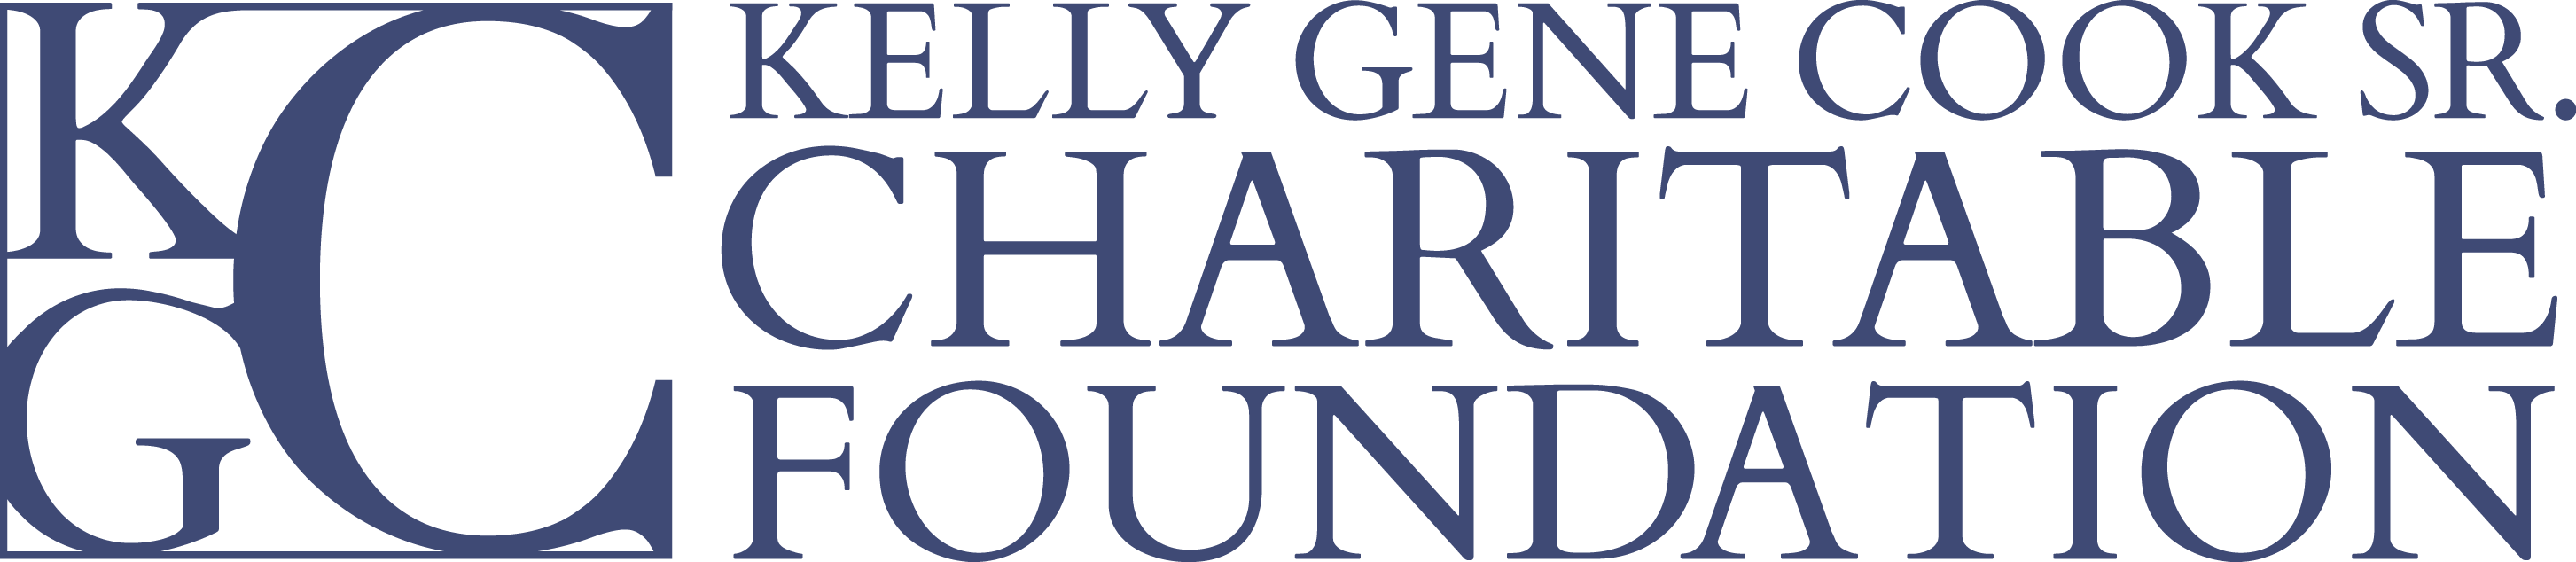 Kelly Gene Cook Sr. Charitable Foundation Inc. logo